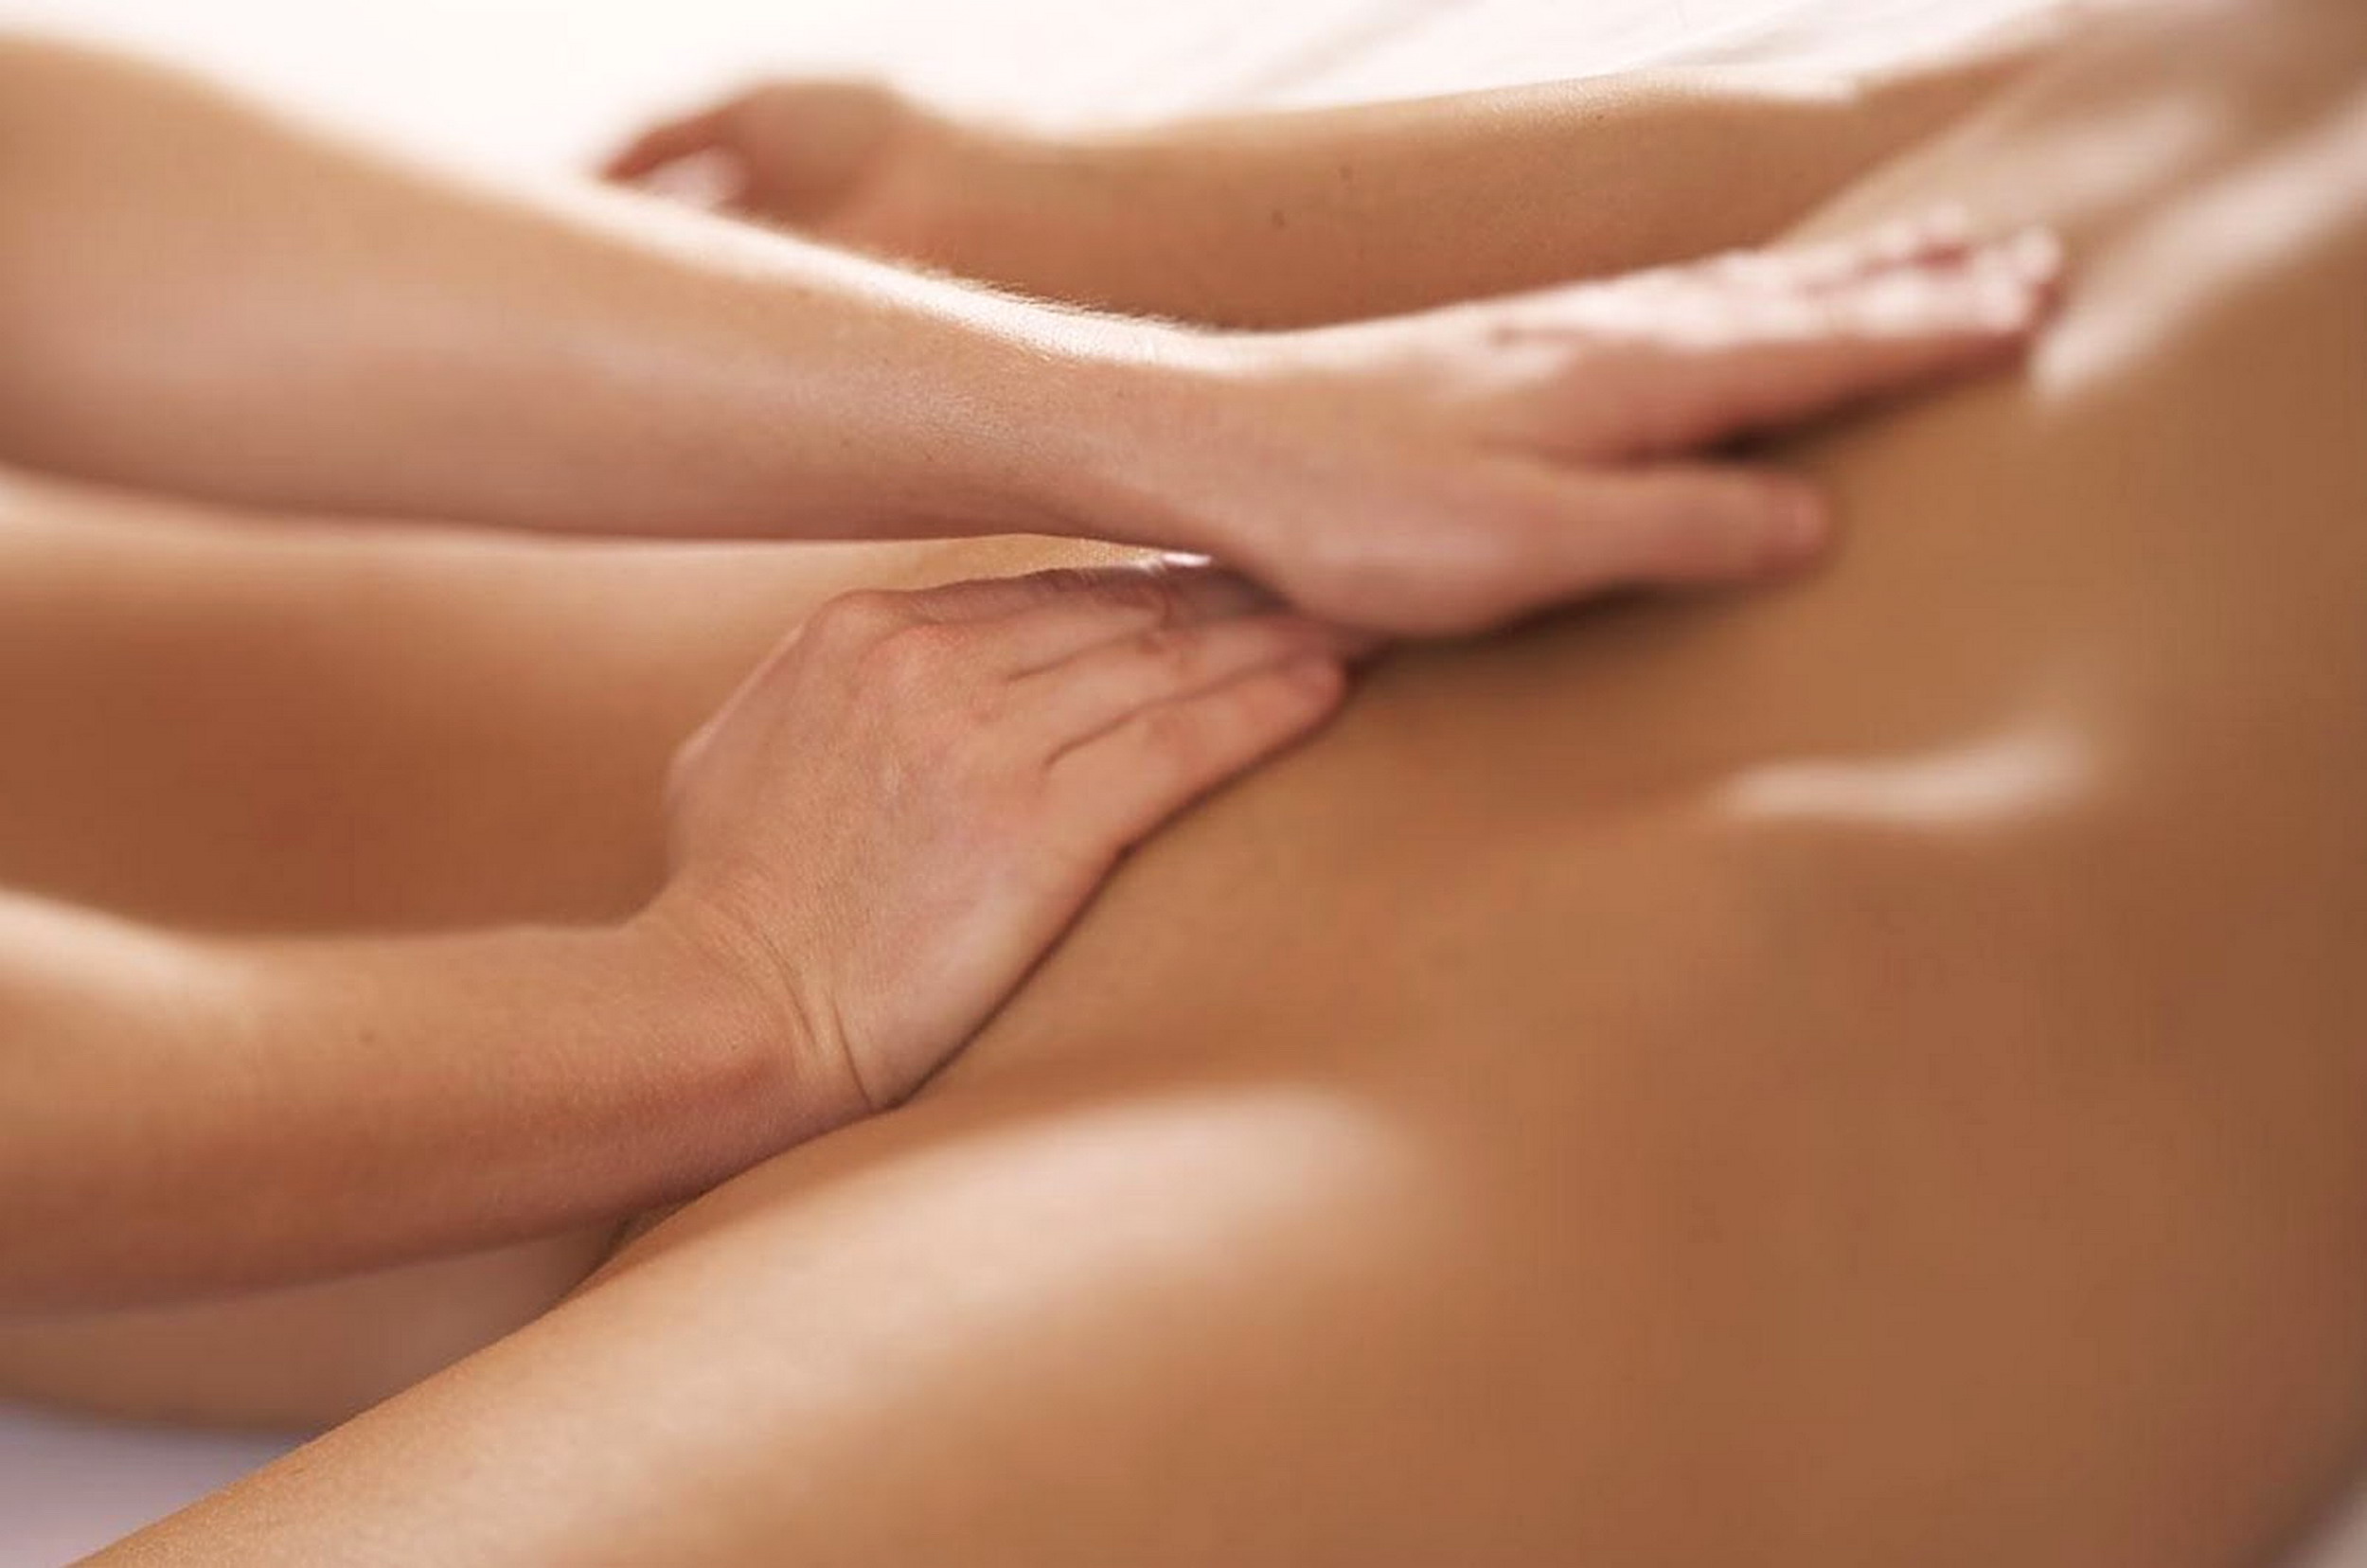 Massaggio Lingam